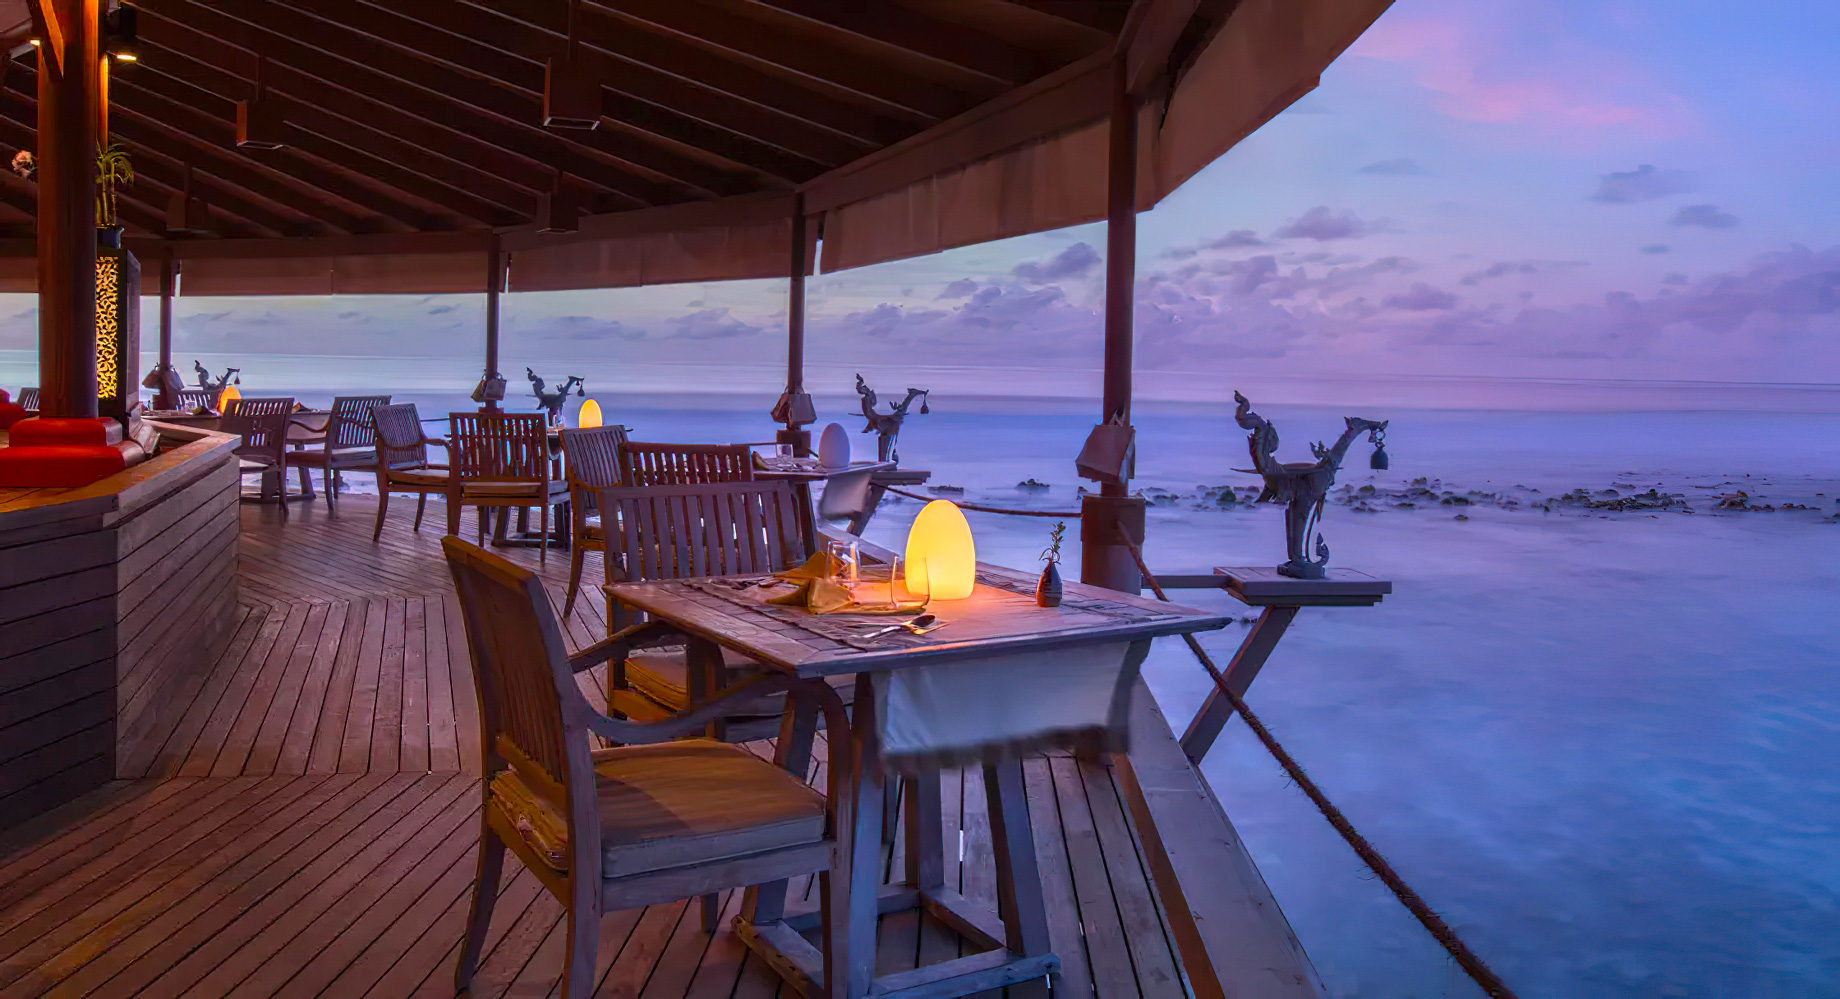 Anantara Thigu Maldives Resort – South Male Atoll, Maldives – Baan Huraa Restaurant Ocean View Sunset